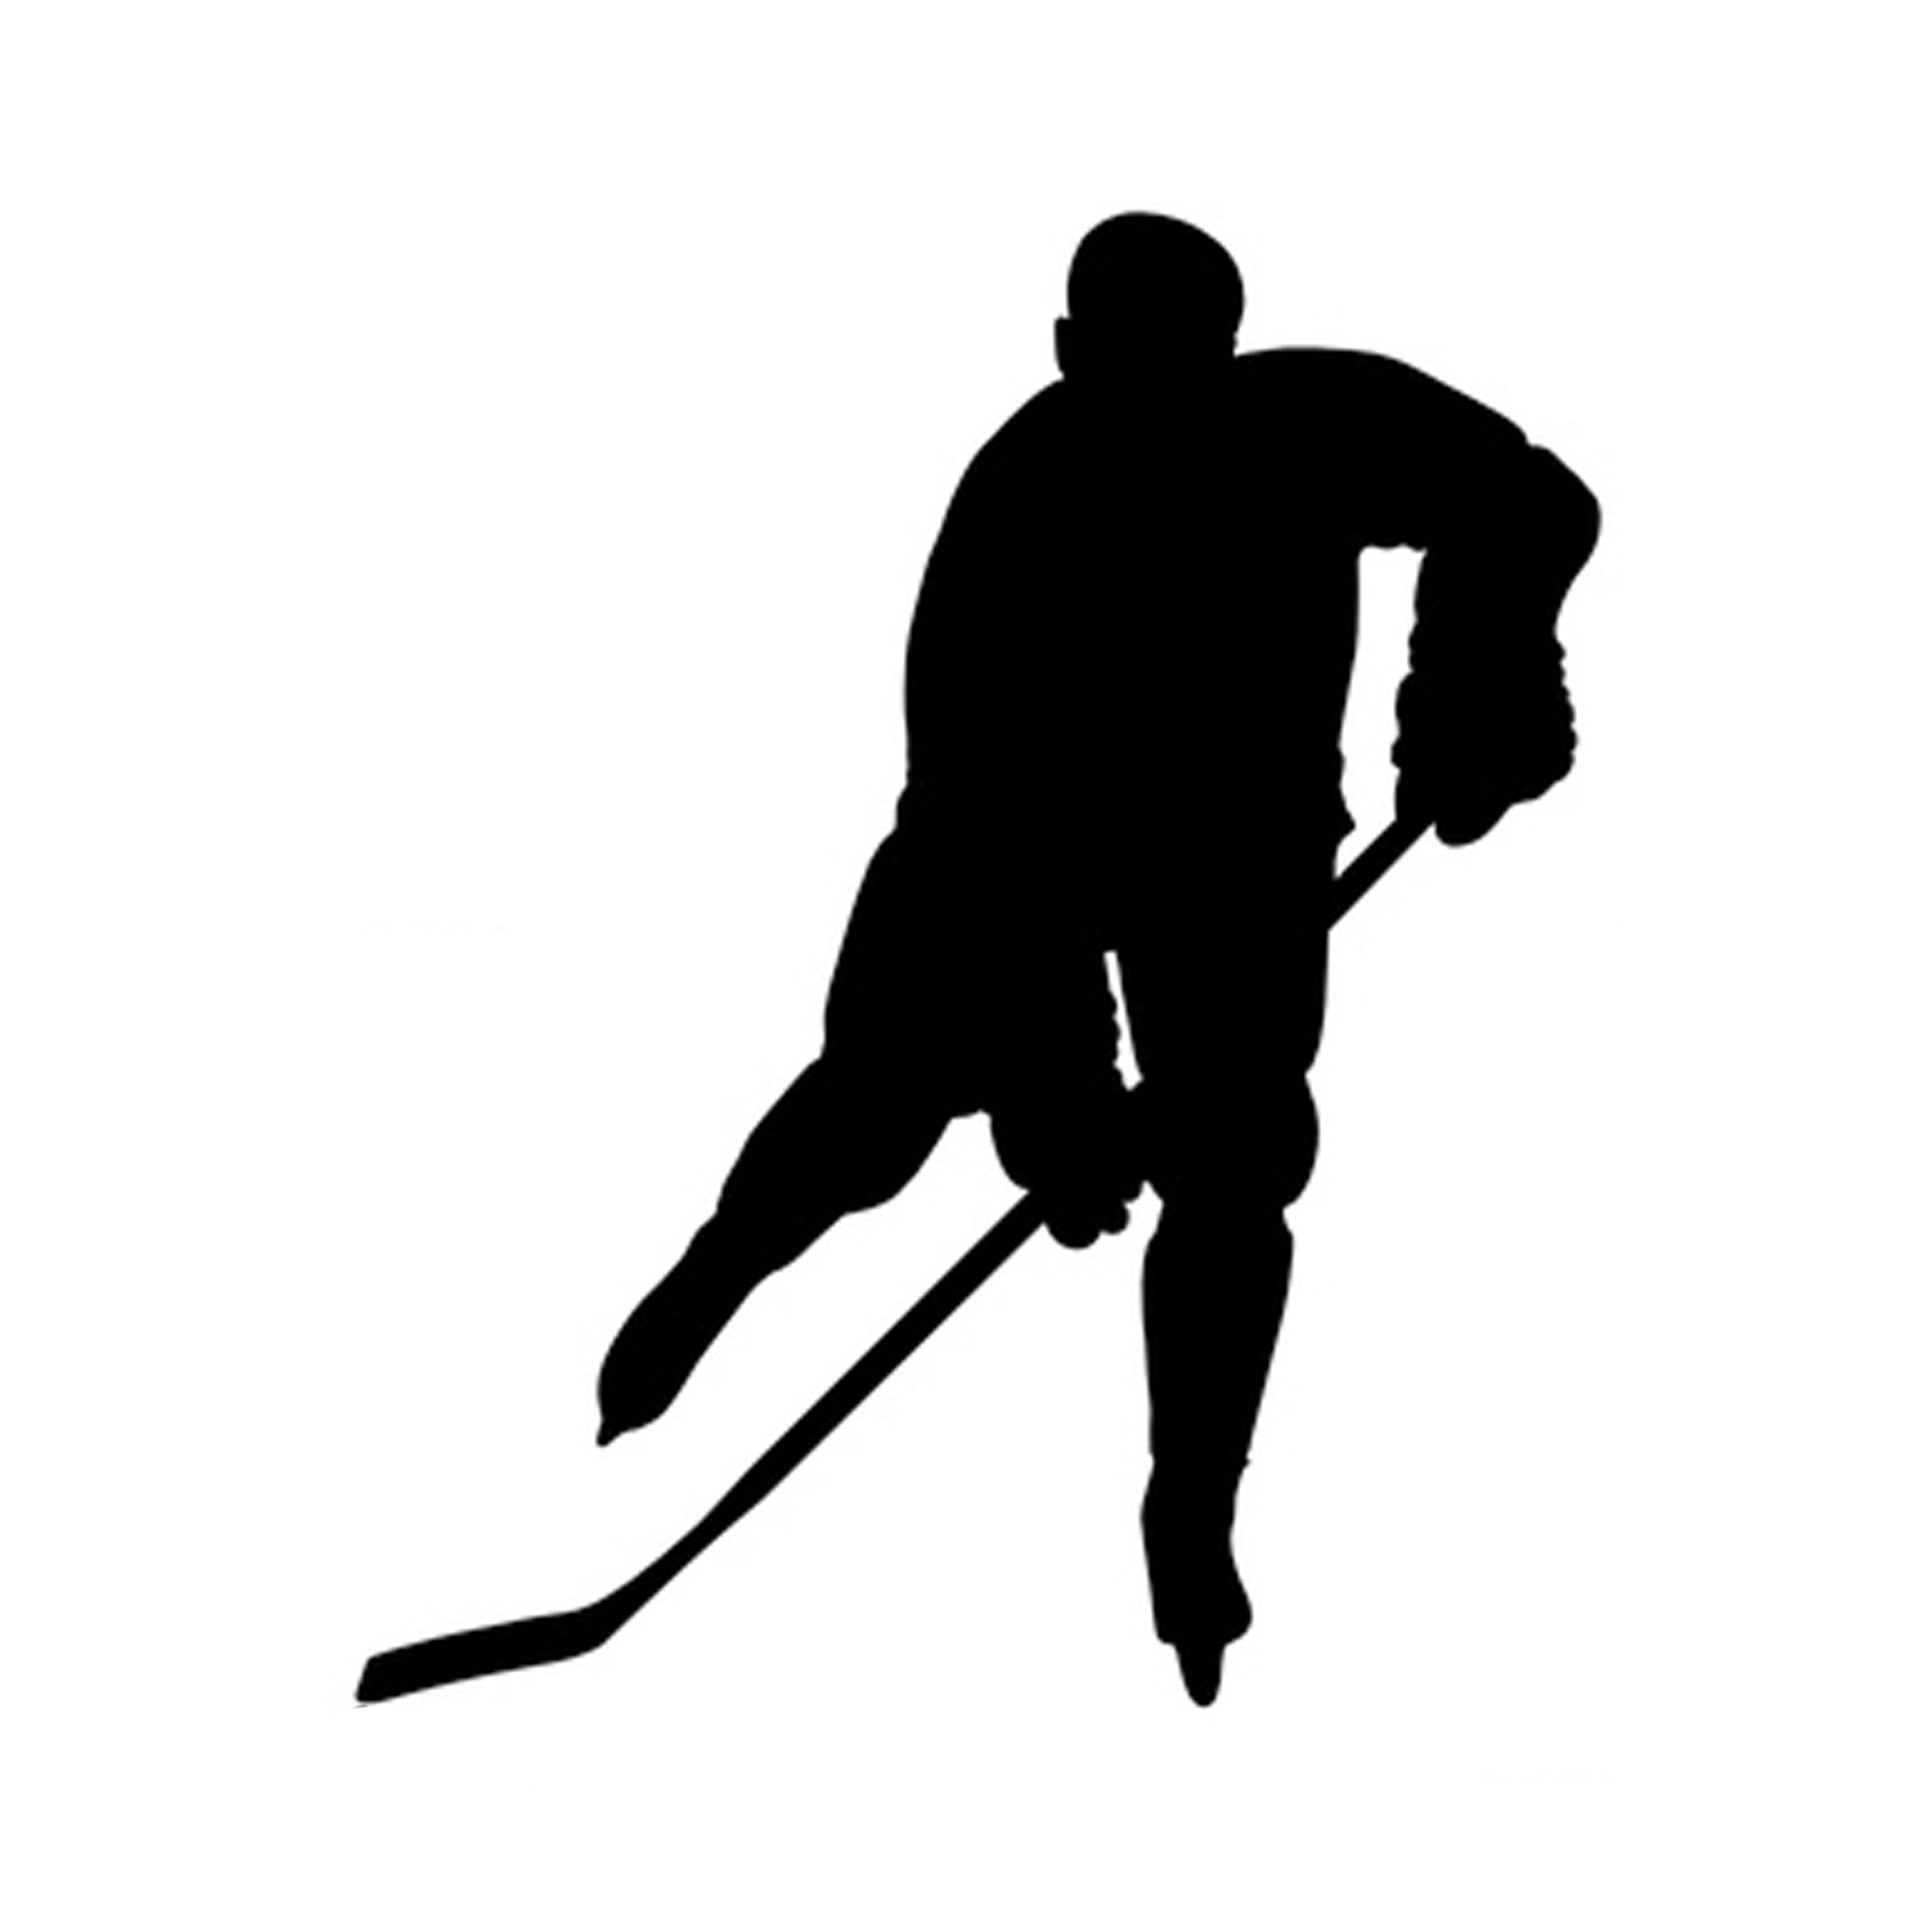 Ice hockey NHL 14 Ice skating Clip art - hockey png download - 512*512 - Free Transparent Ice Hockey png Download.